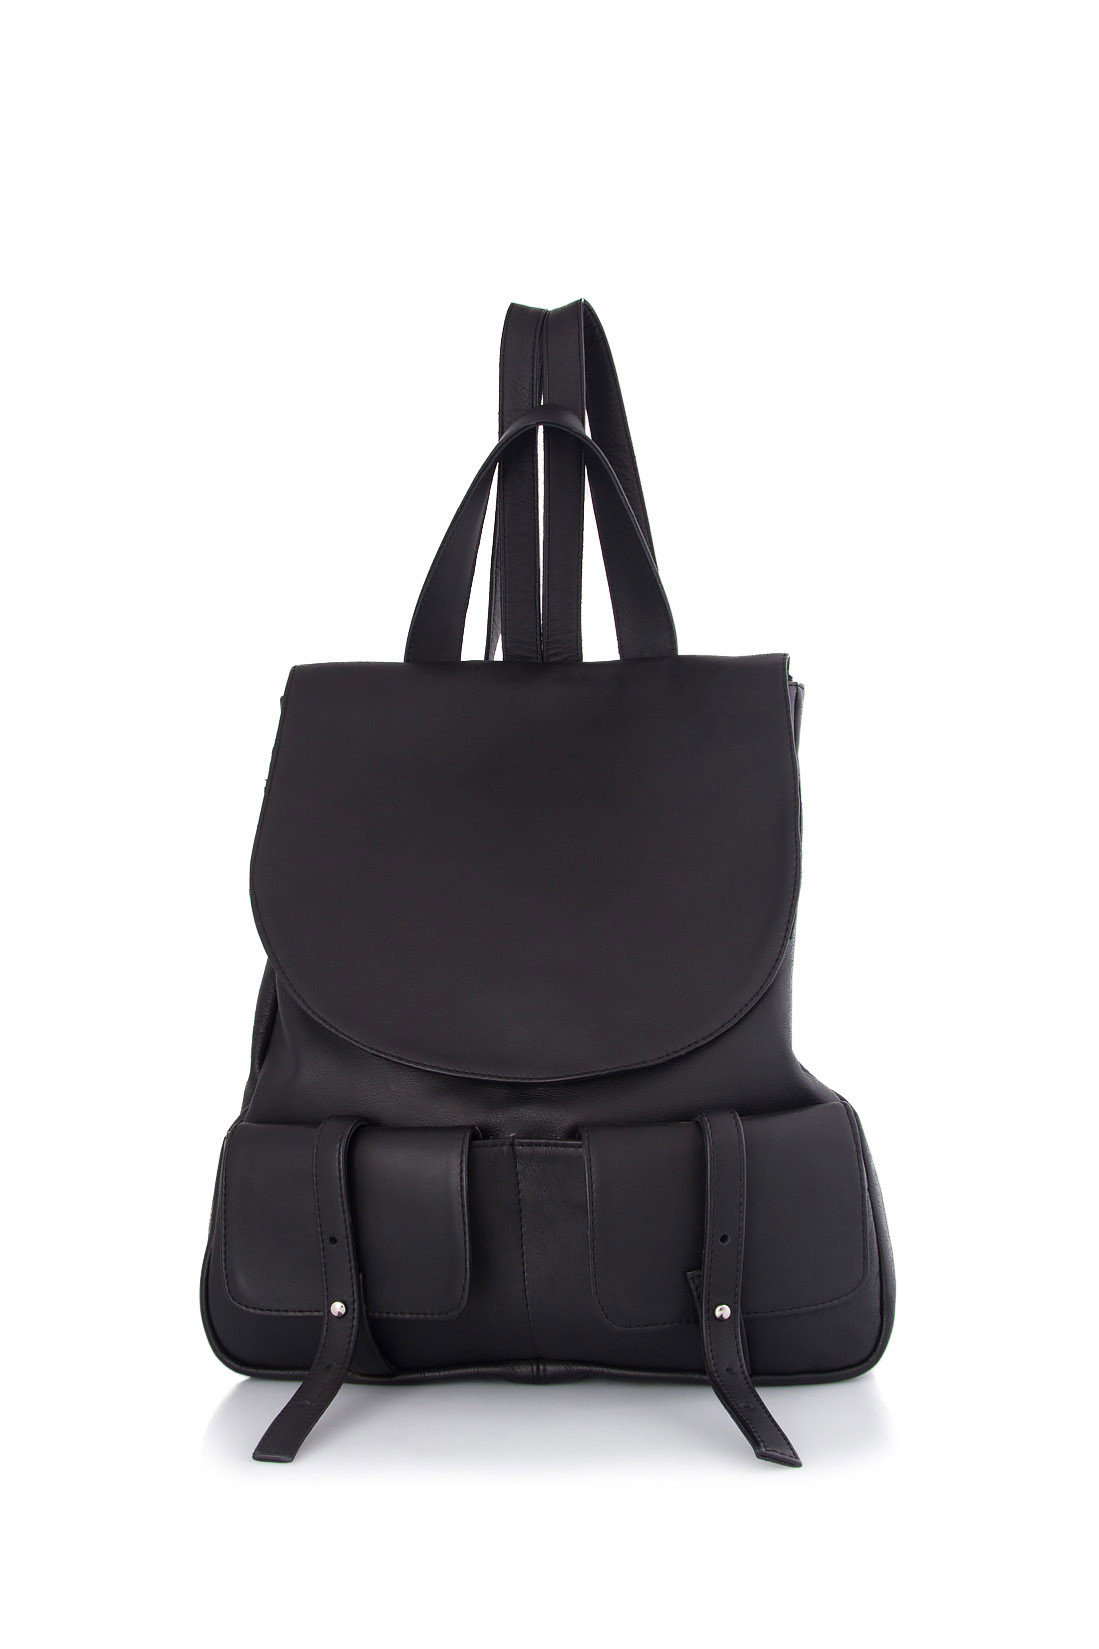 Black leather backpack Mihaela Glavan  image 0